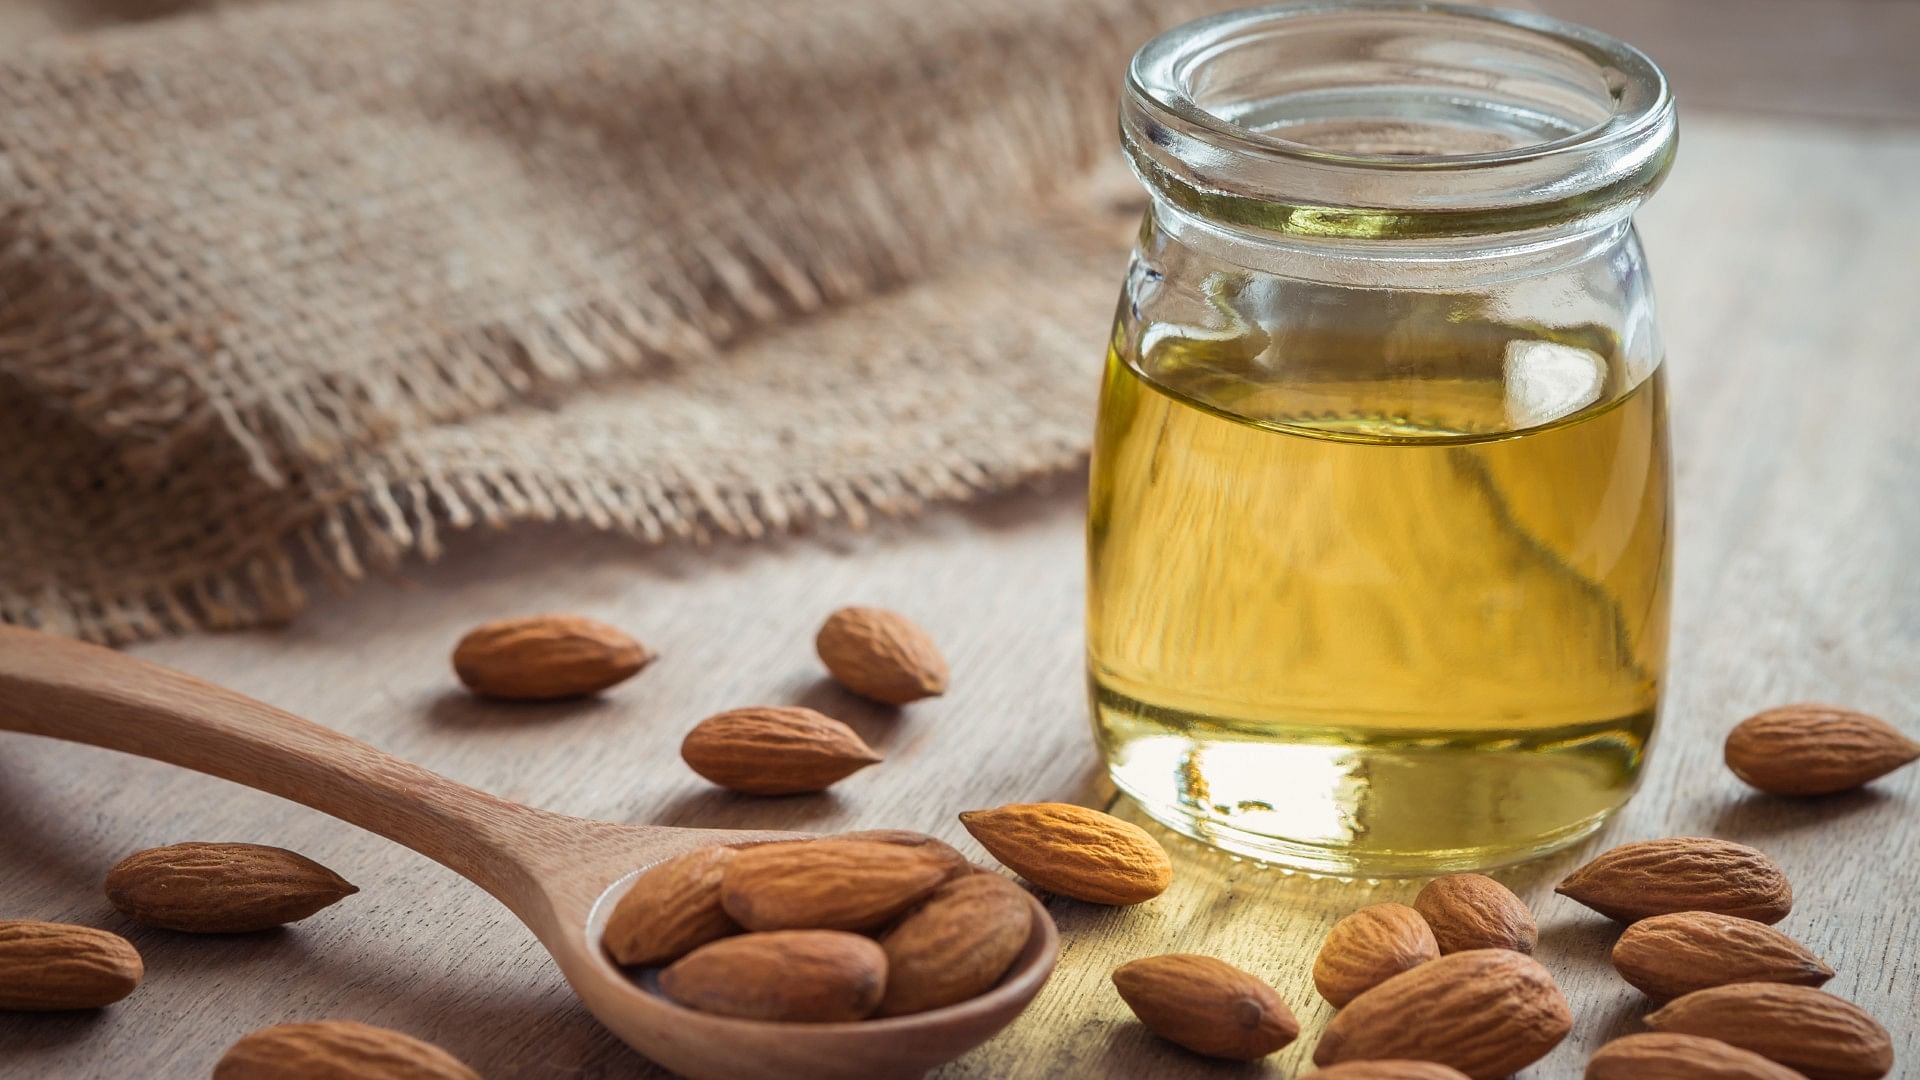 Almond Water Benefits In Hindi: badam ka pani pine ke fayde